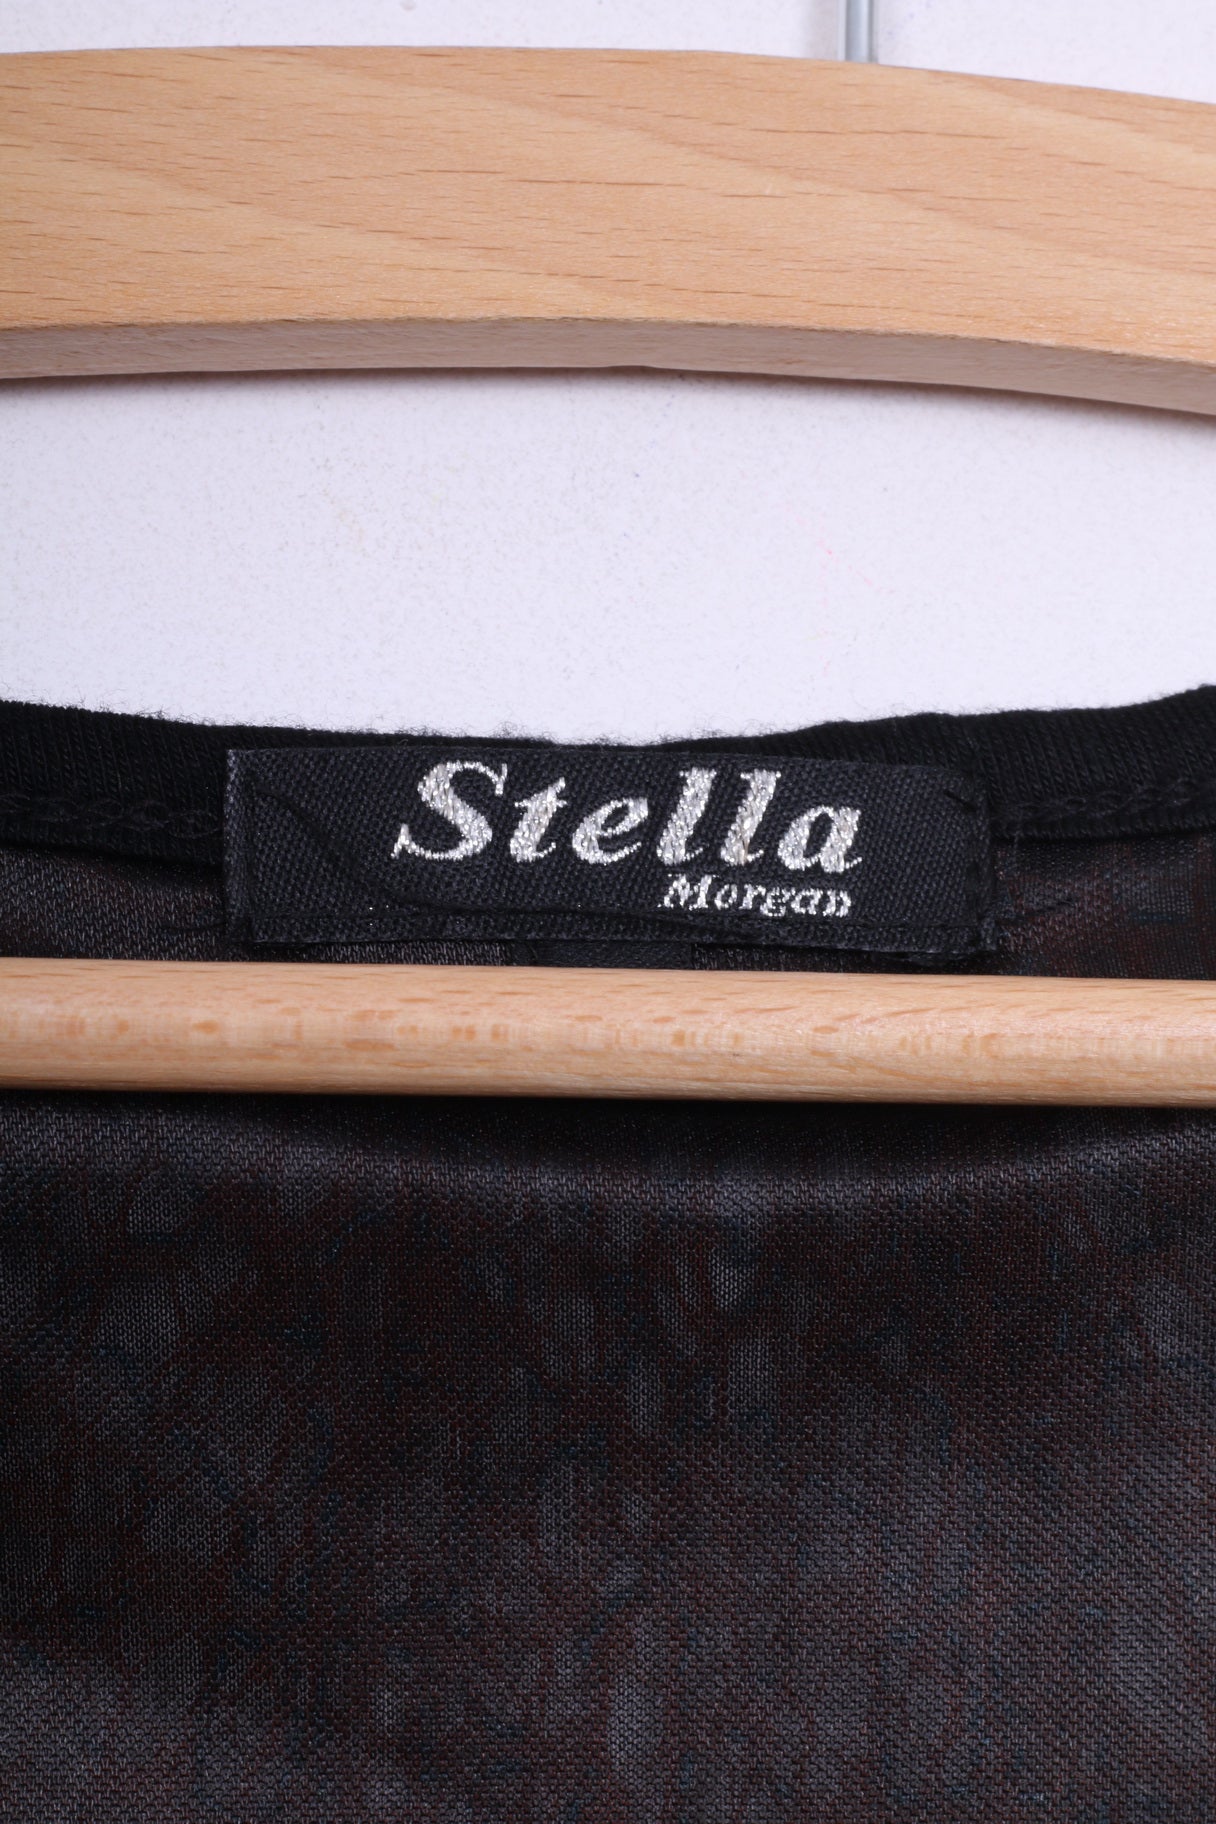 Stella Morgan Womens 8 S Tunic Shirt Mesh Pink/Black Sleeveless Nylon Summer Top Boho